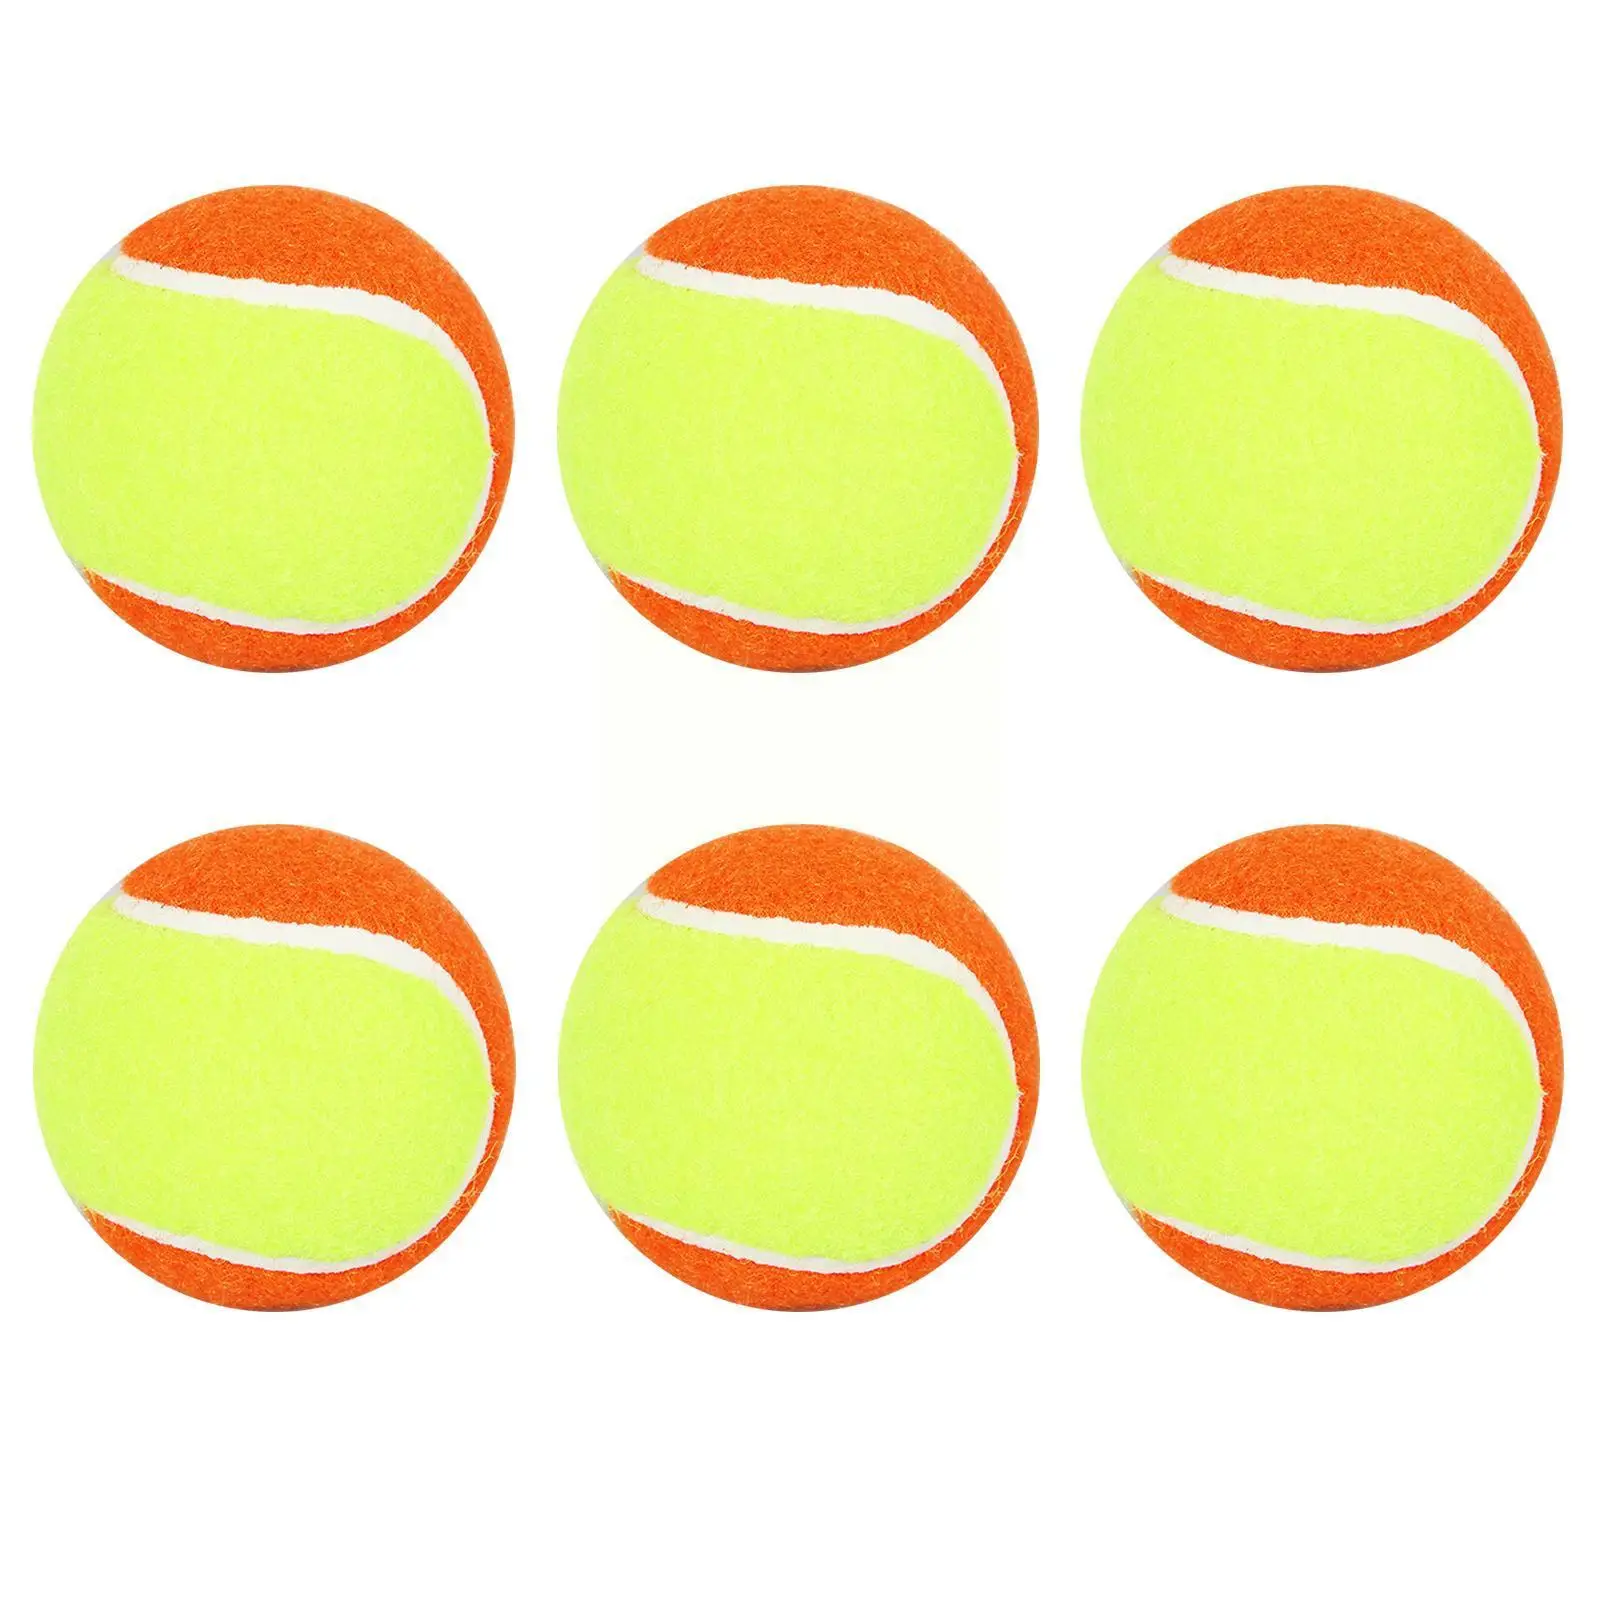 6CM Kids Soft Training Beach Tennis Ball Rubber Material Tennis Color Balls Outdoor Sports Toy Orange Yellow V8Q5